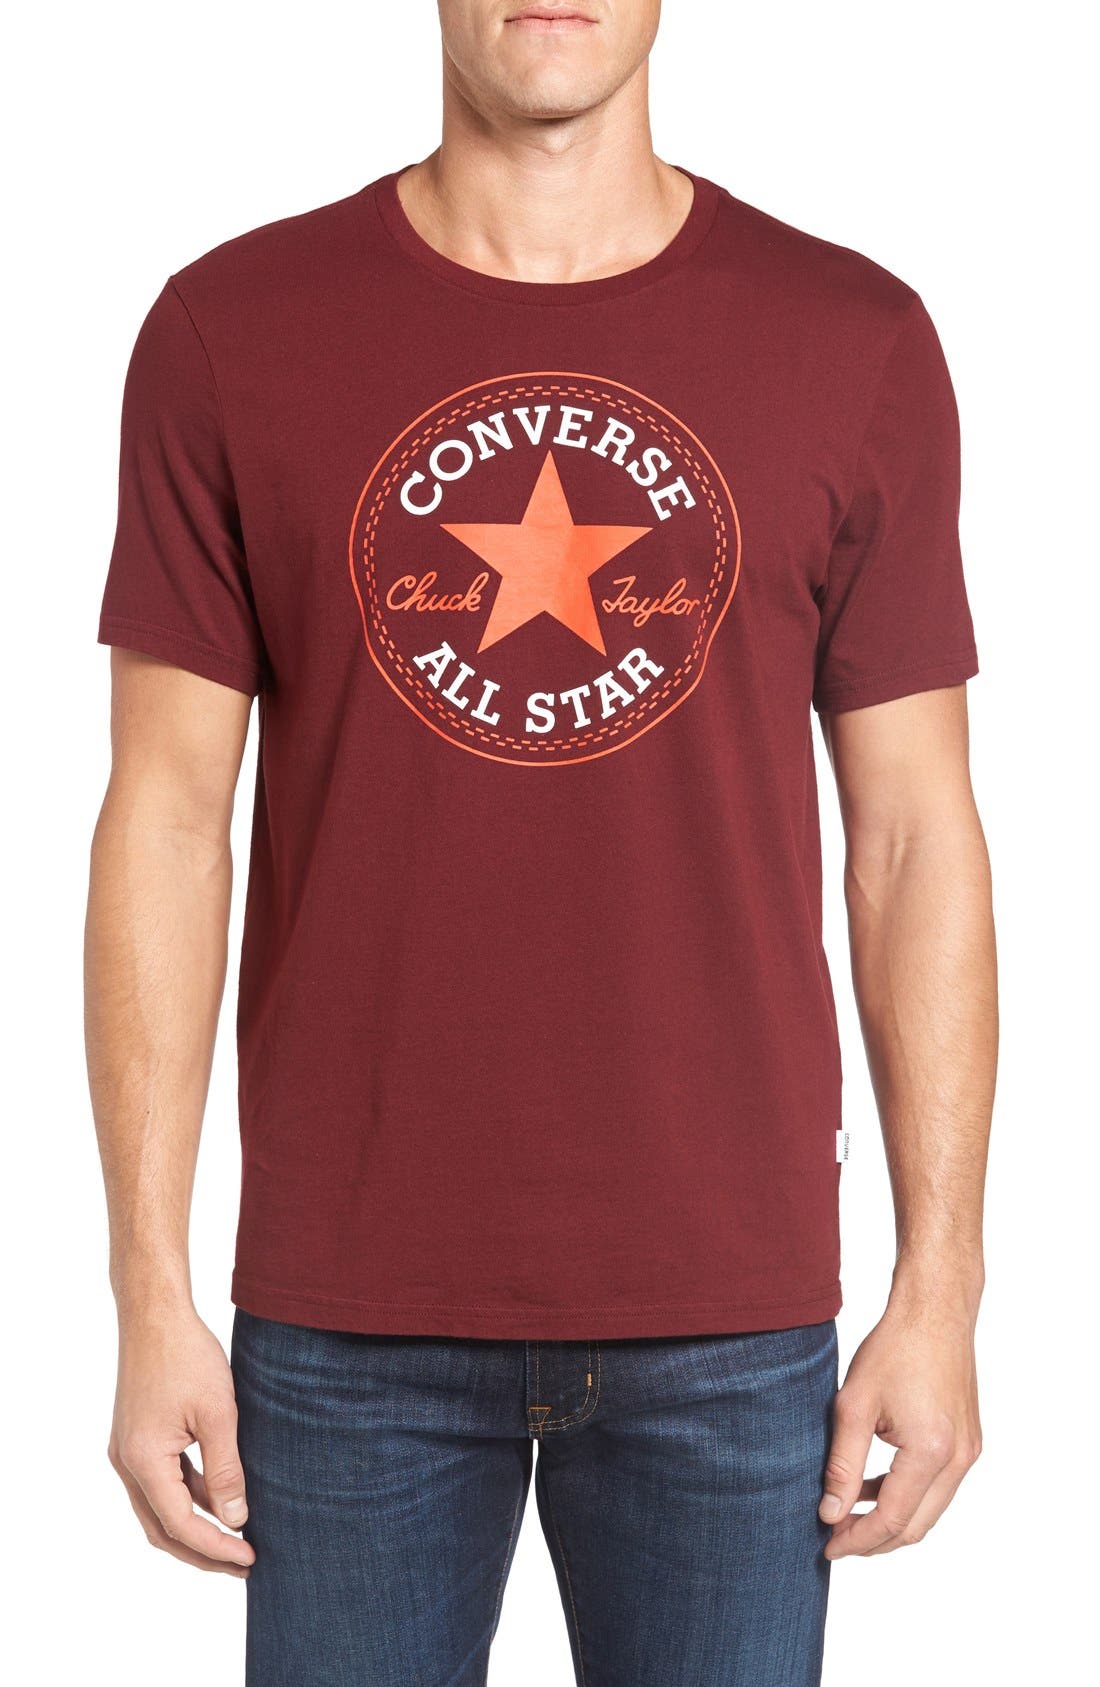 converse maroon t shirt